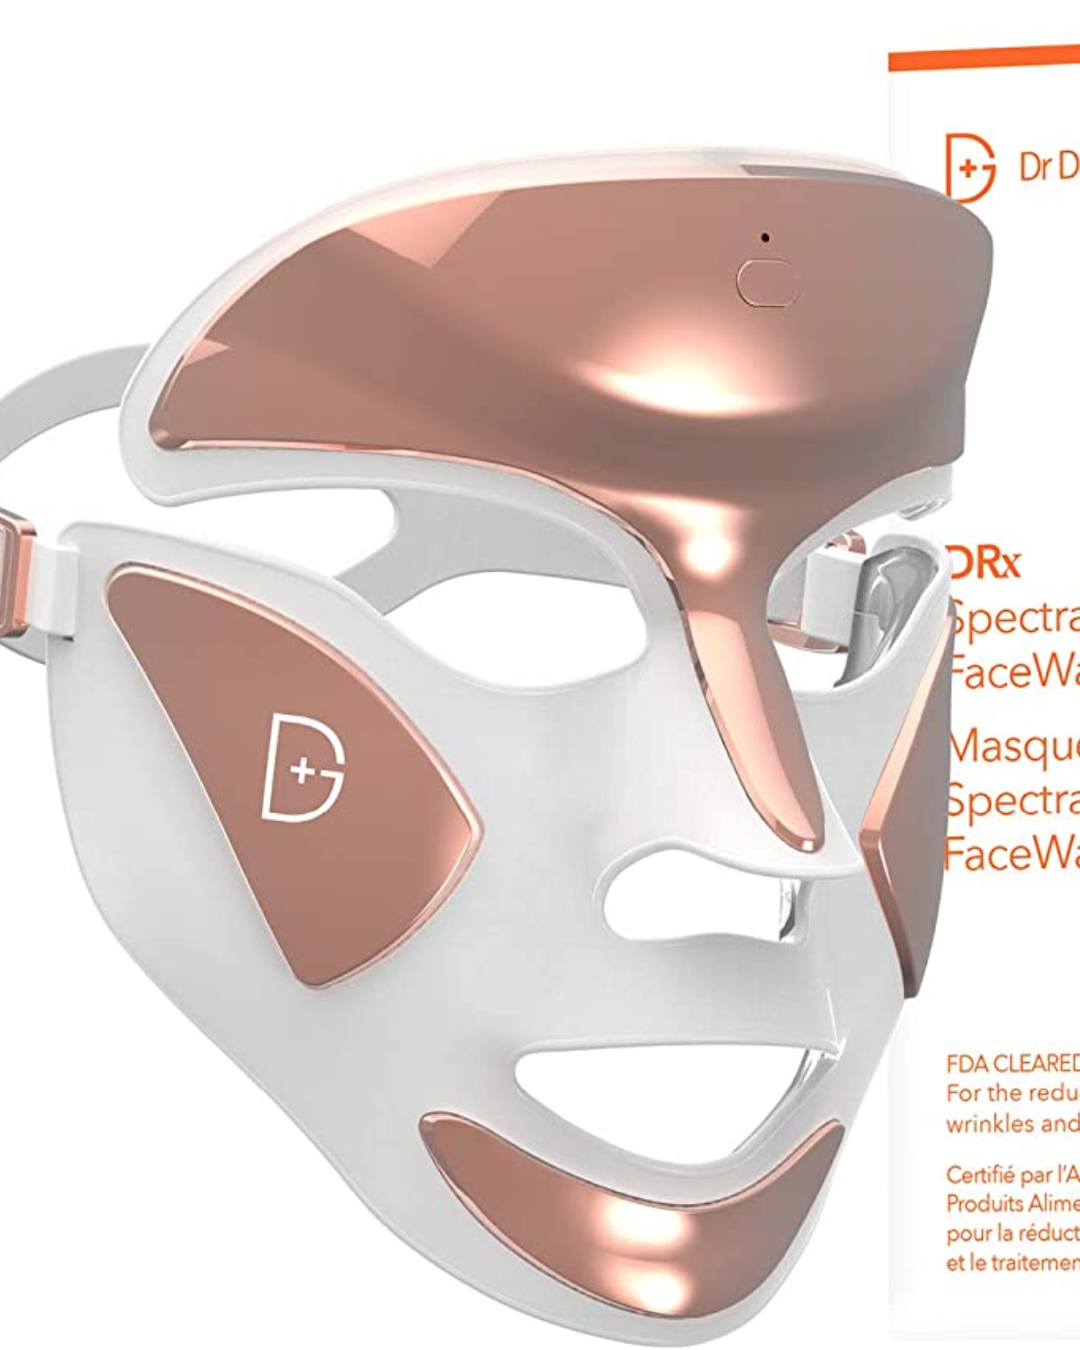 Dr Dennis Gross LED facial mask